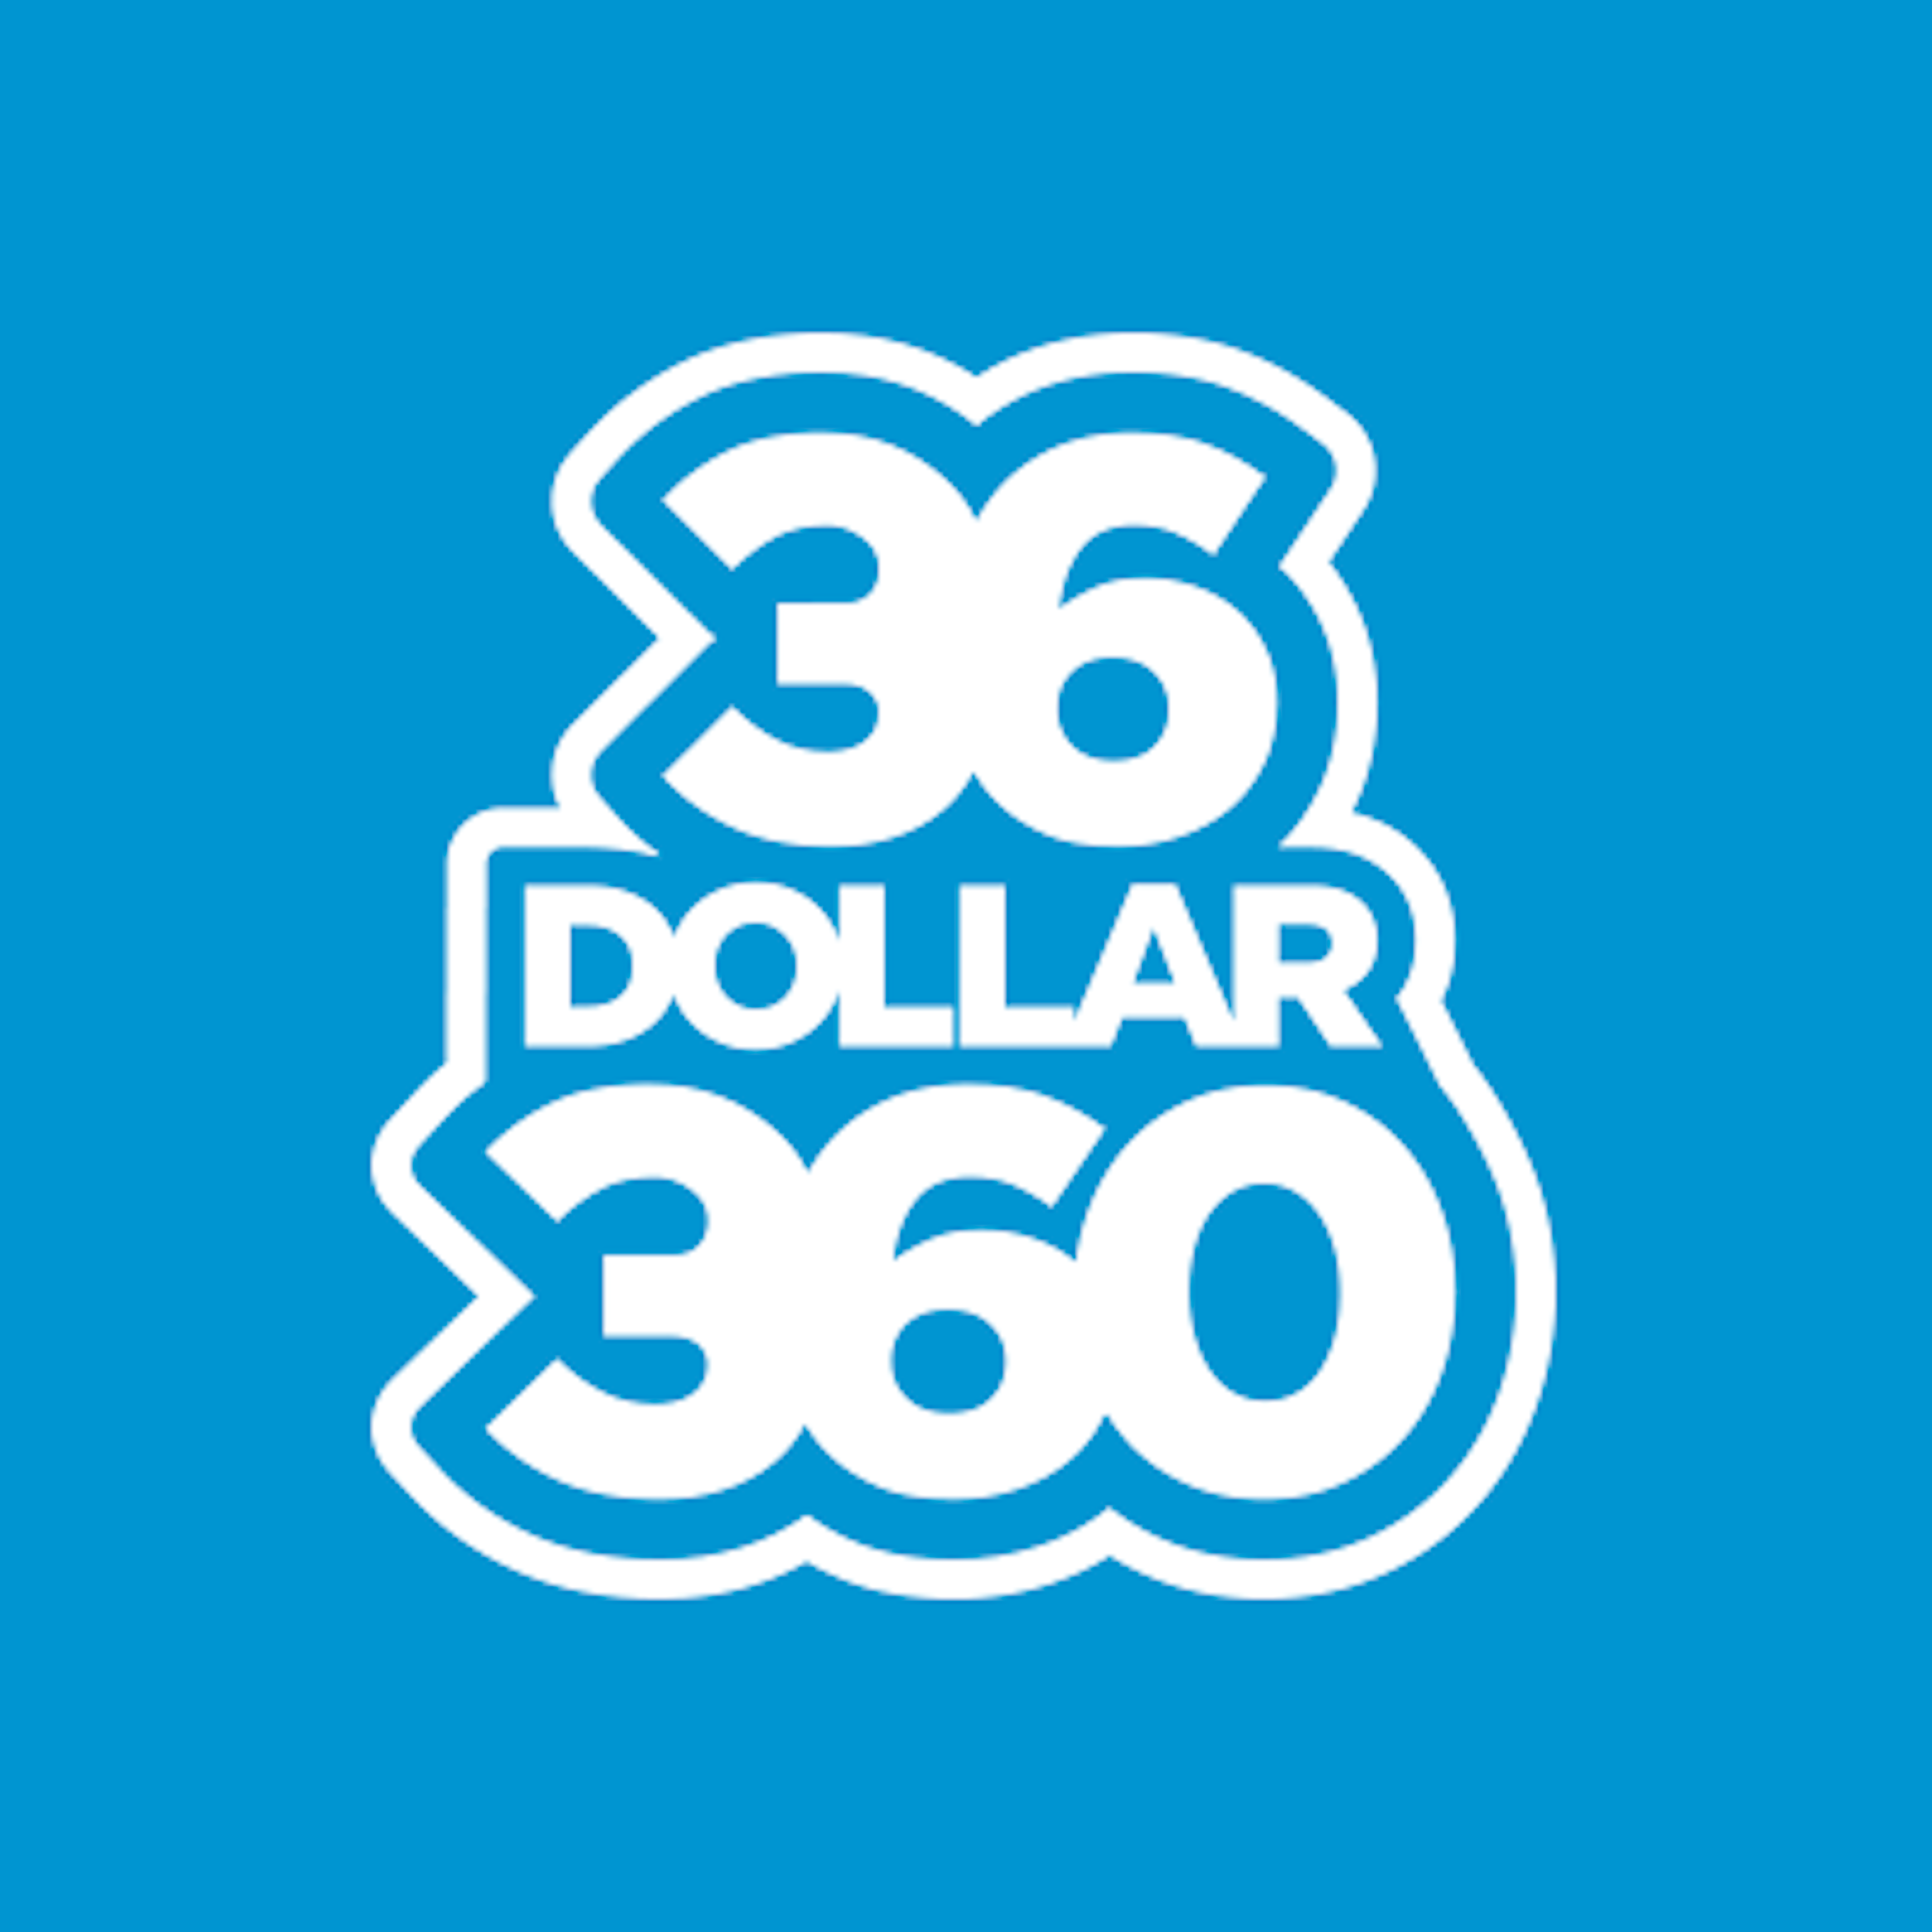 36 Dollar 360 Logo